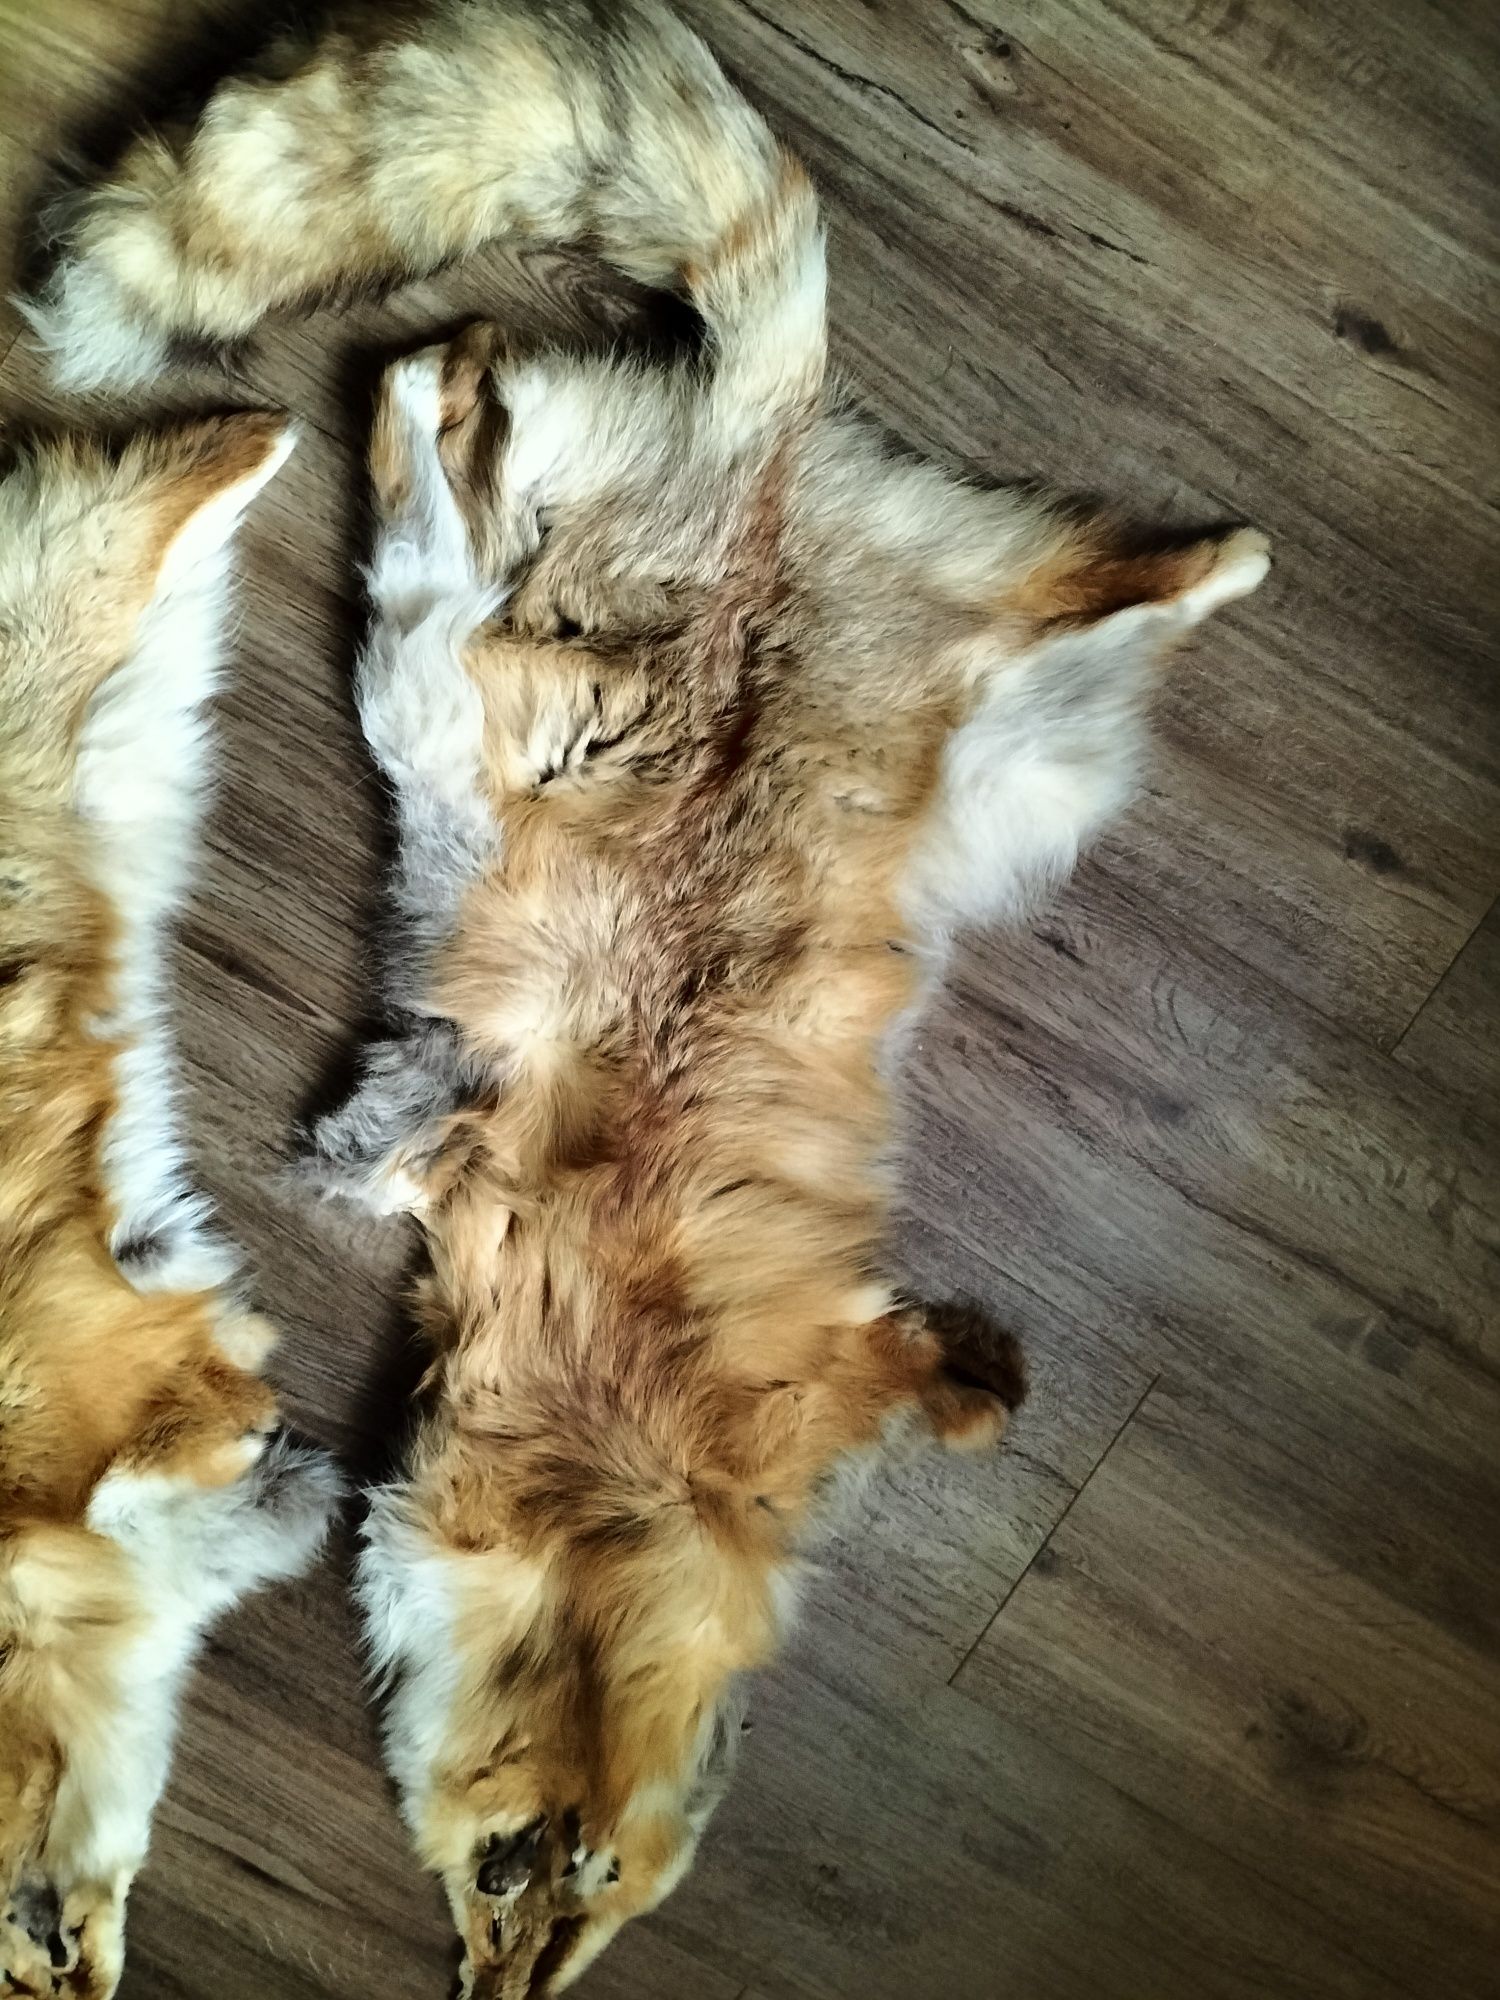 Peles de raposa 80 cm comprimento conj. 2